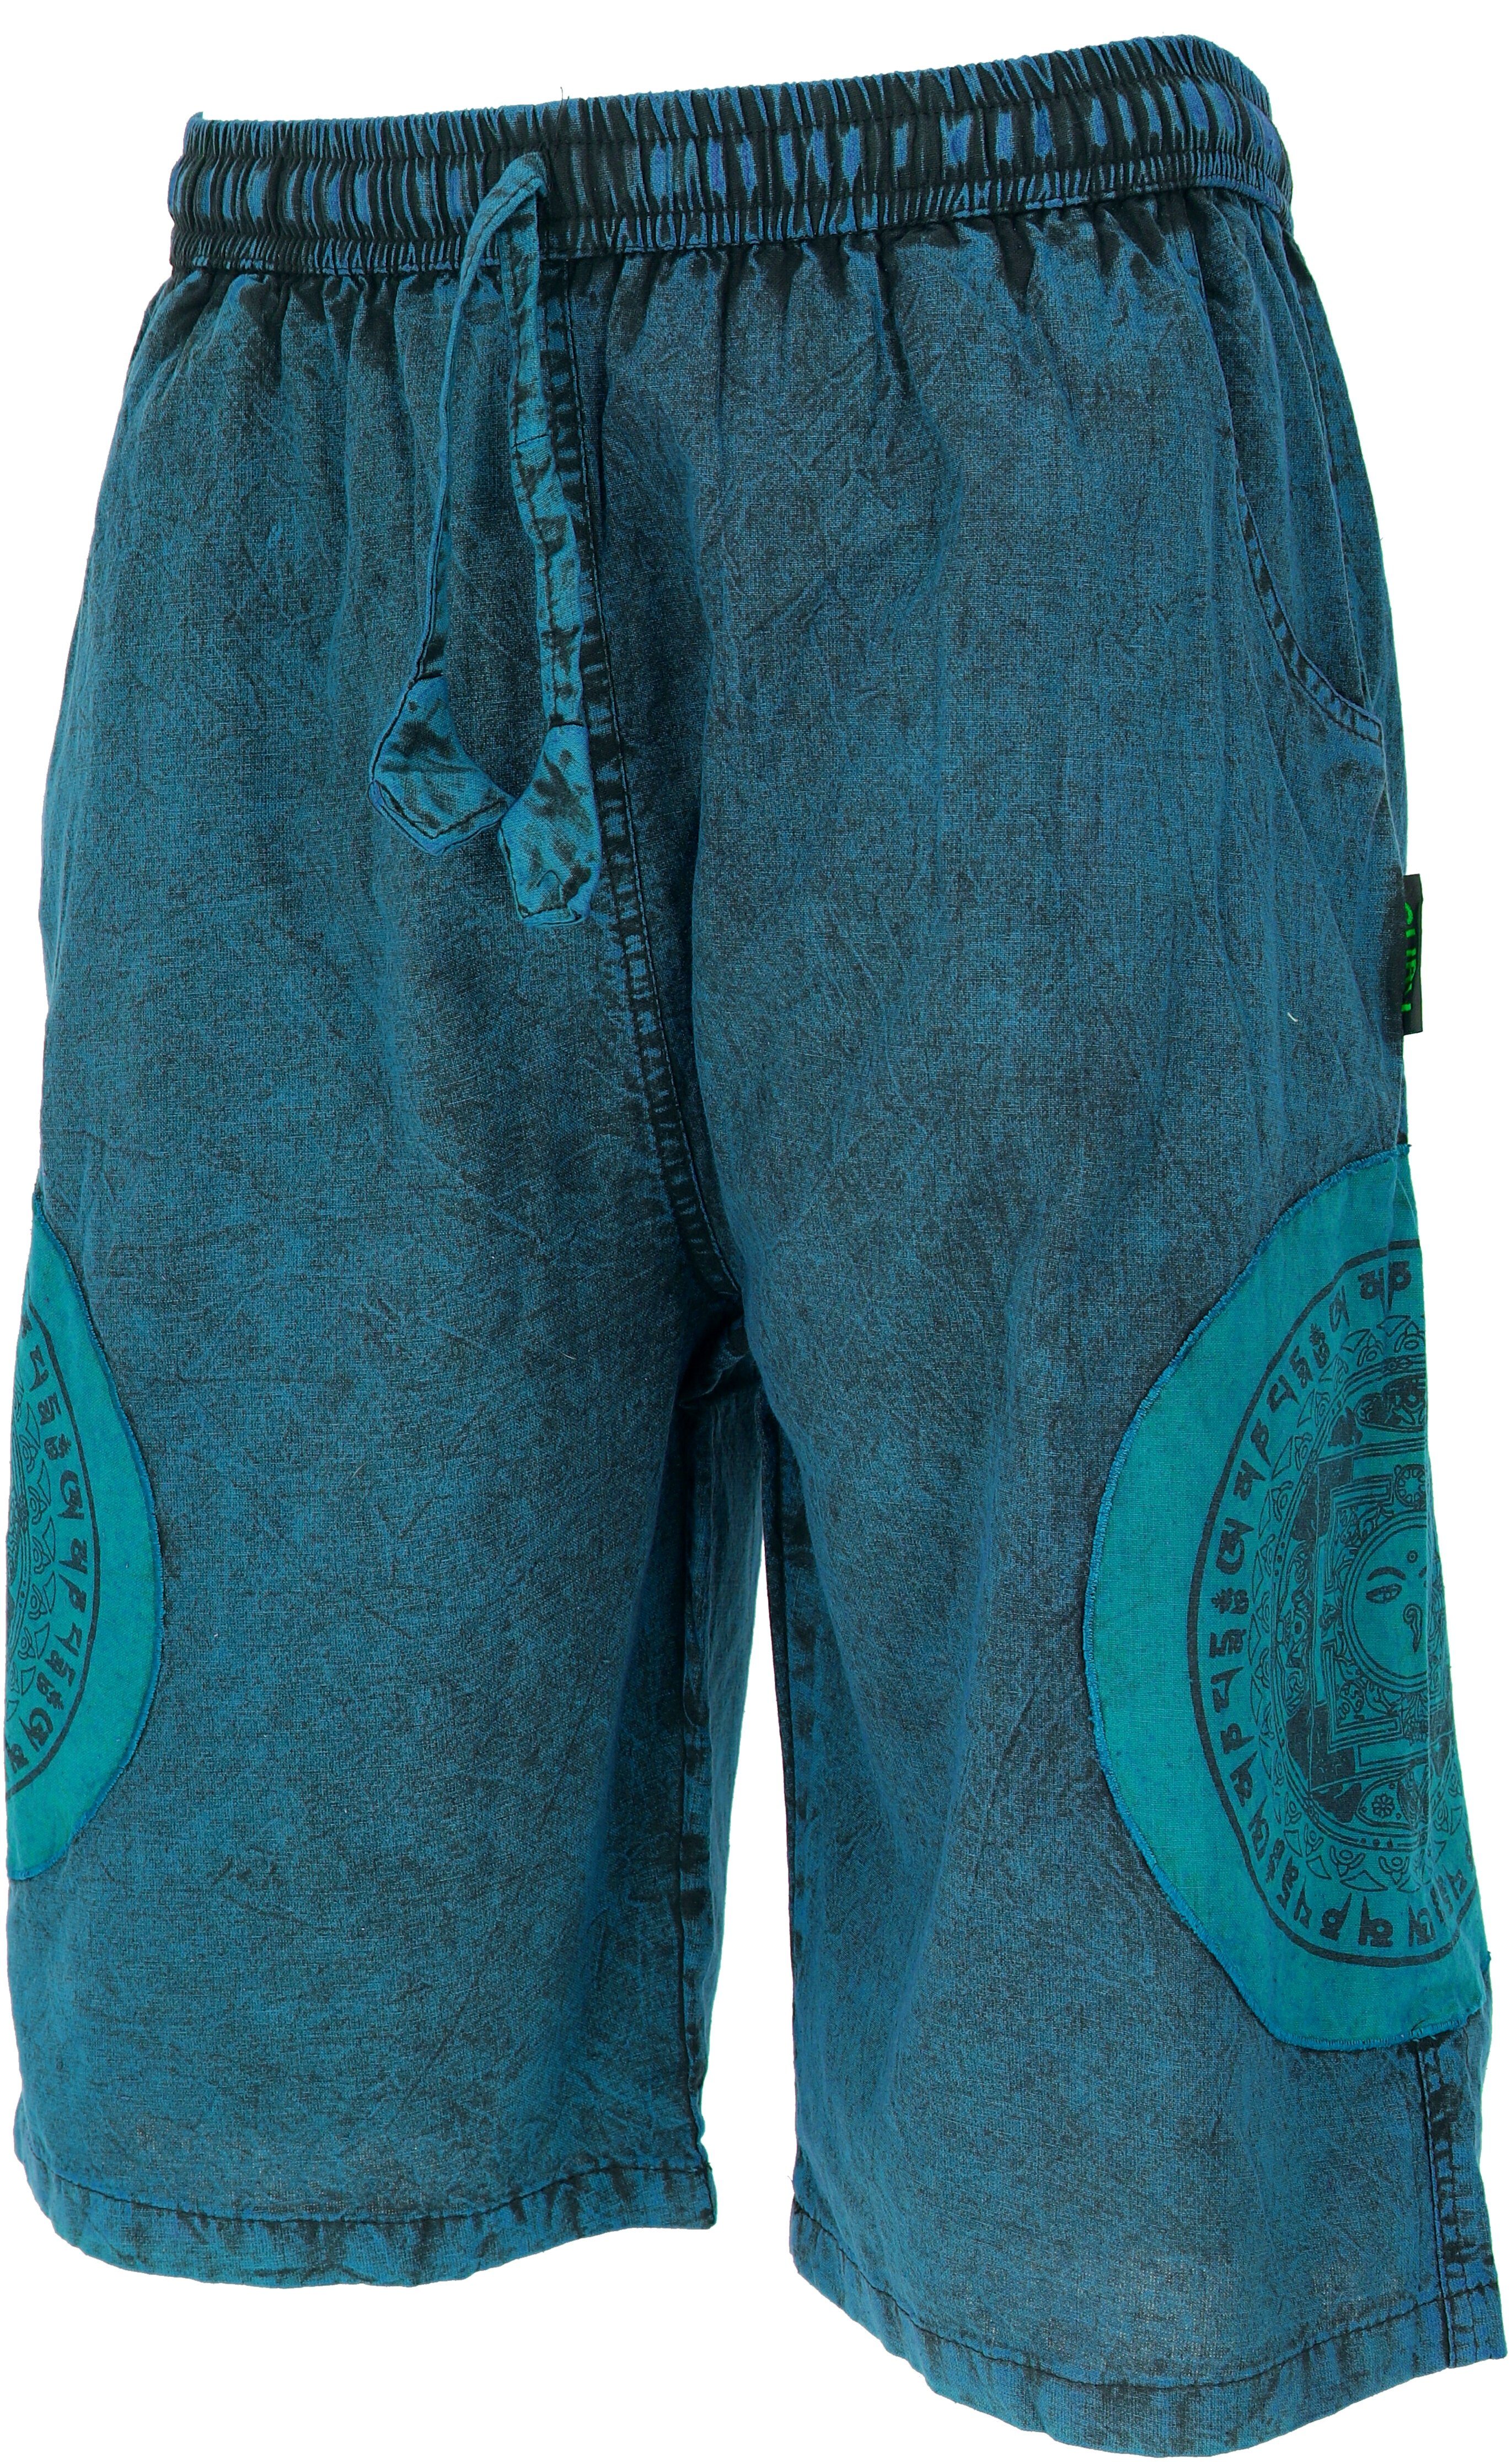 Guru-Shop Relaxhose Ethno Ethno Shorts.. blau Style, Hippie, Patchwork alternative Stonwasch Bekleidung Yogashorts